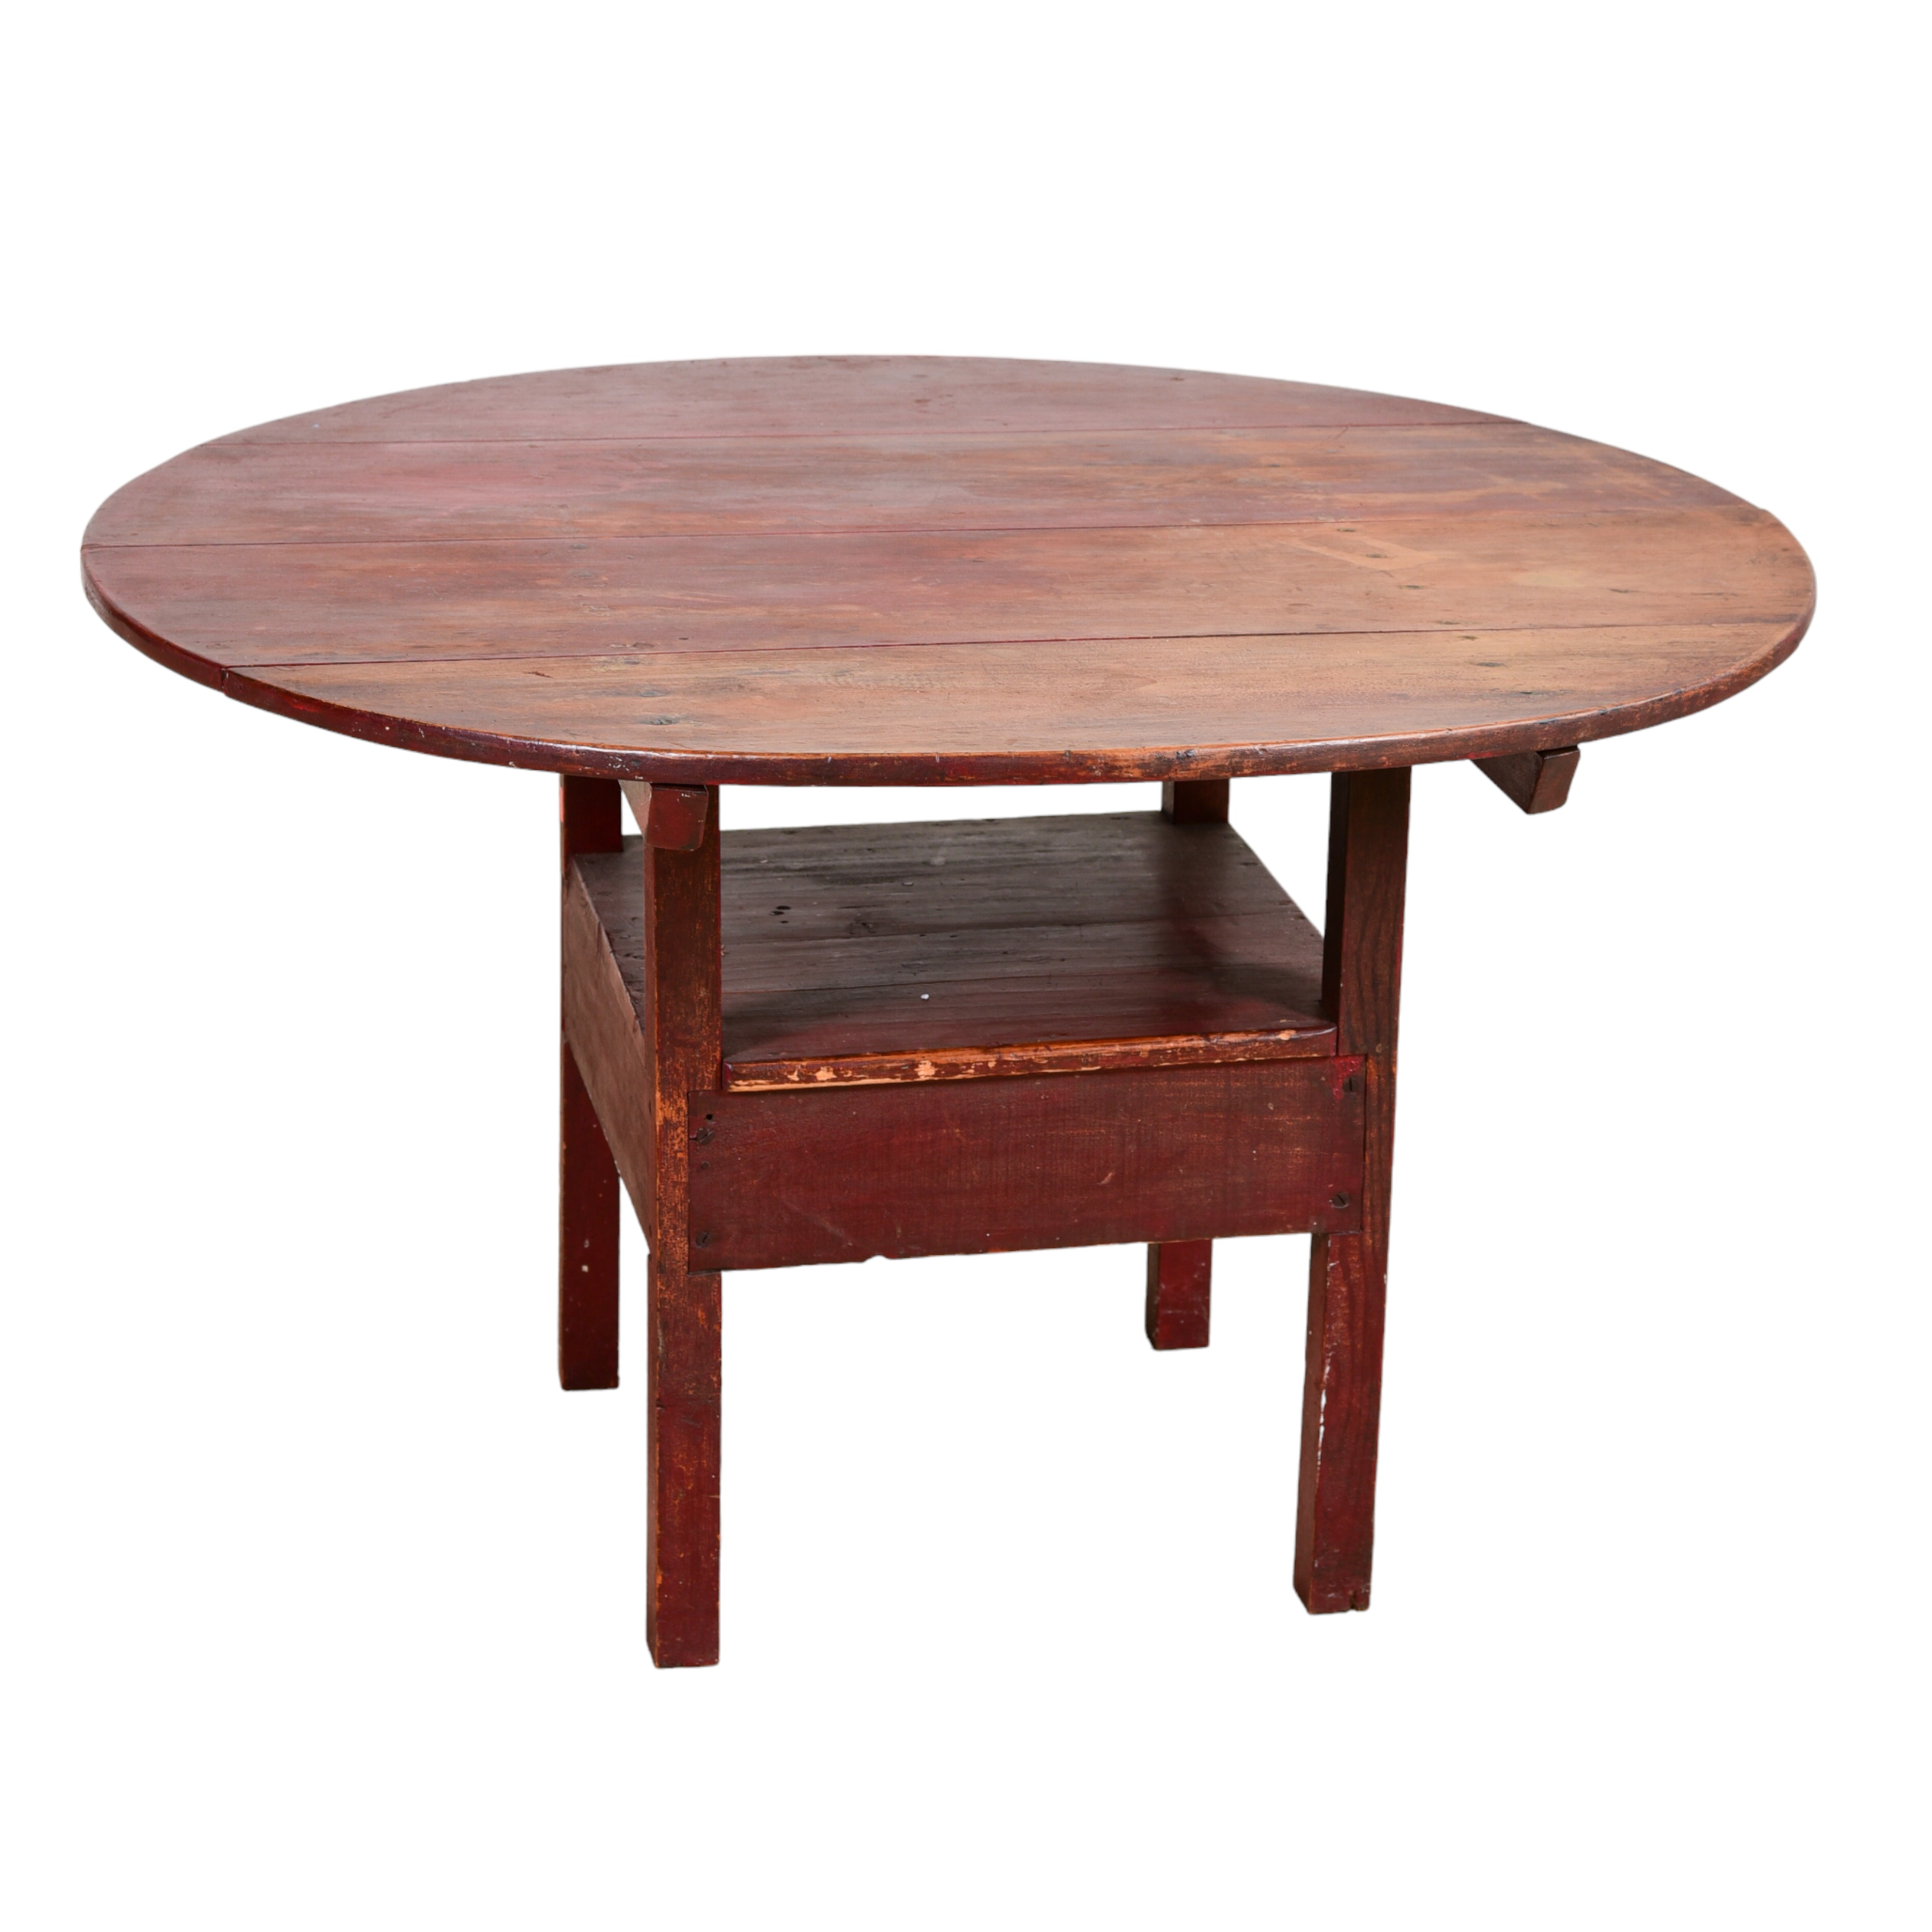 Pine NE chair table round 4 board 3ca3df